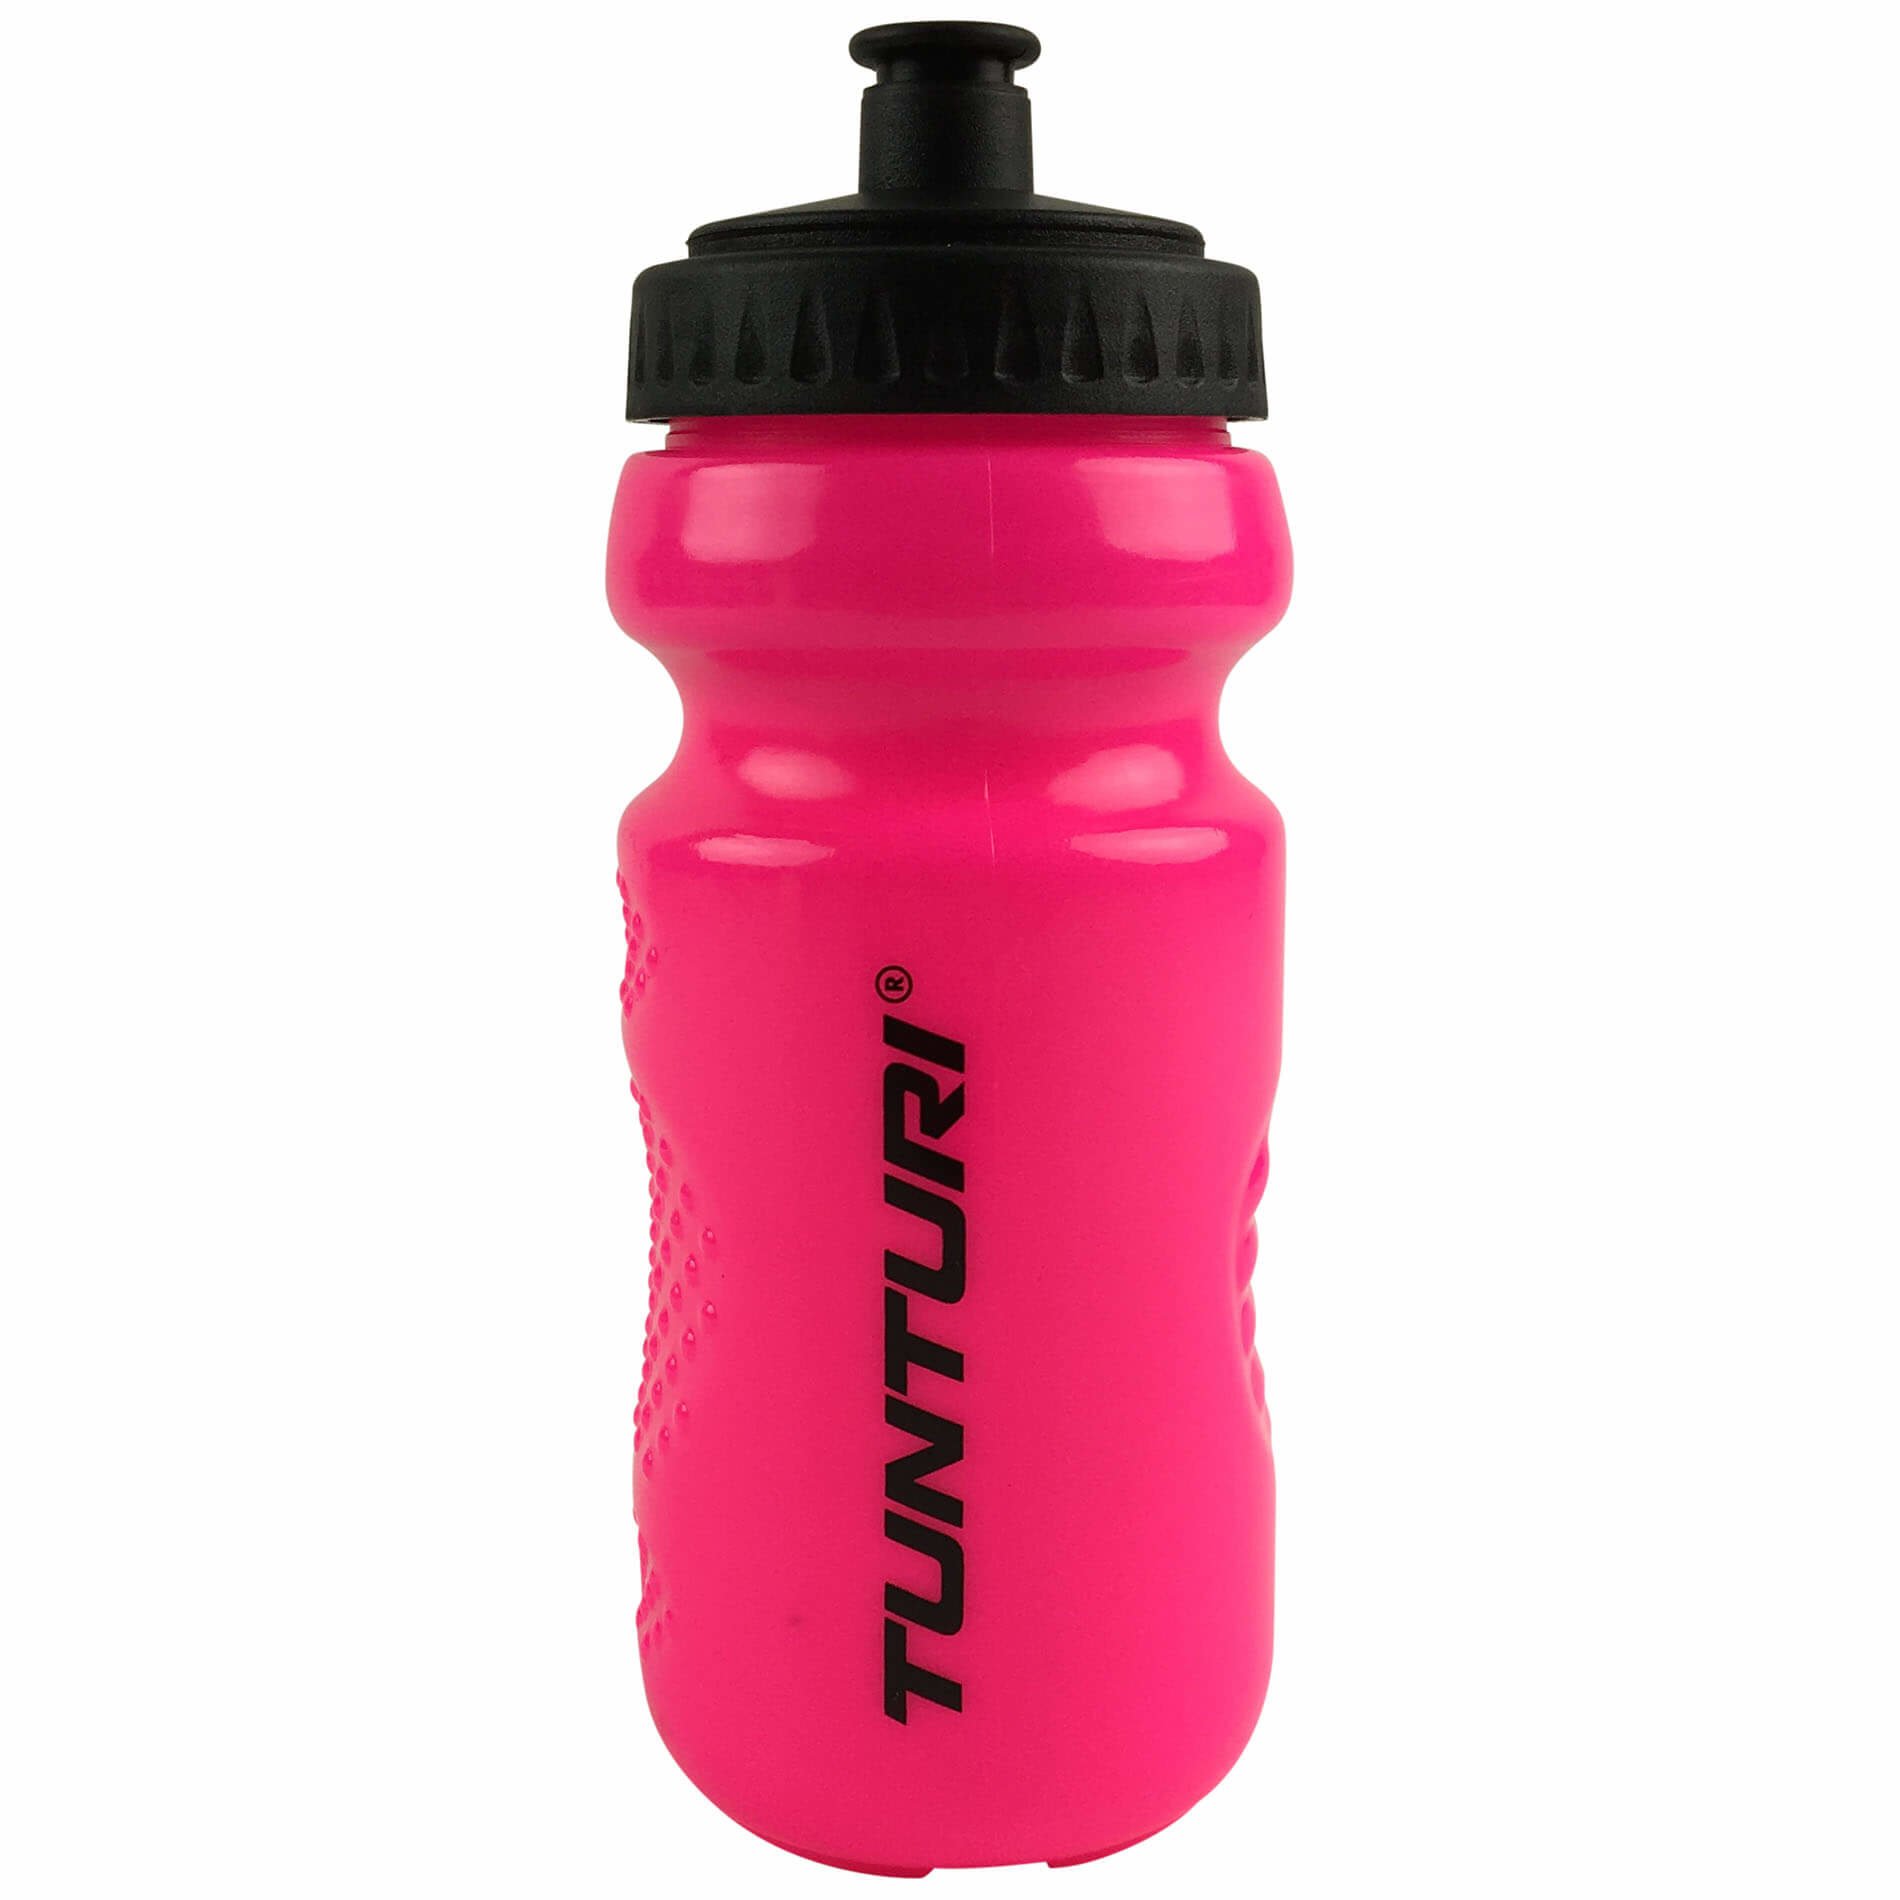 Бутылка для воды 500 мл. Спорт бутылка Tunturi. Спортивная бутылка 500мл. Kit4fit бутылка. Бутылка для воды спортивная розовая.